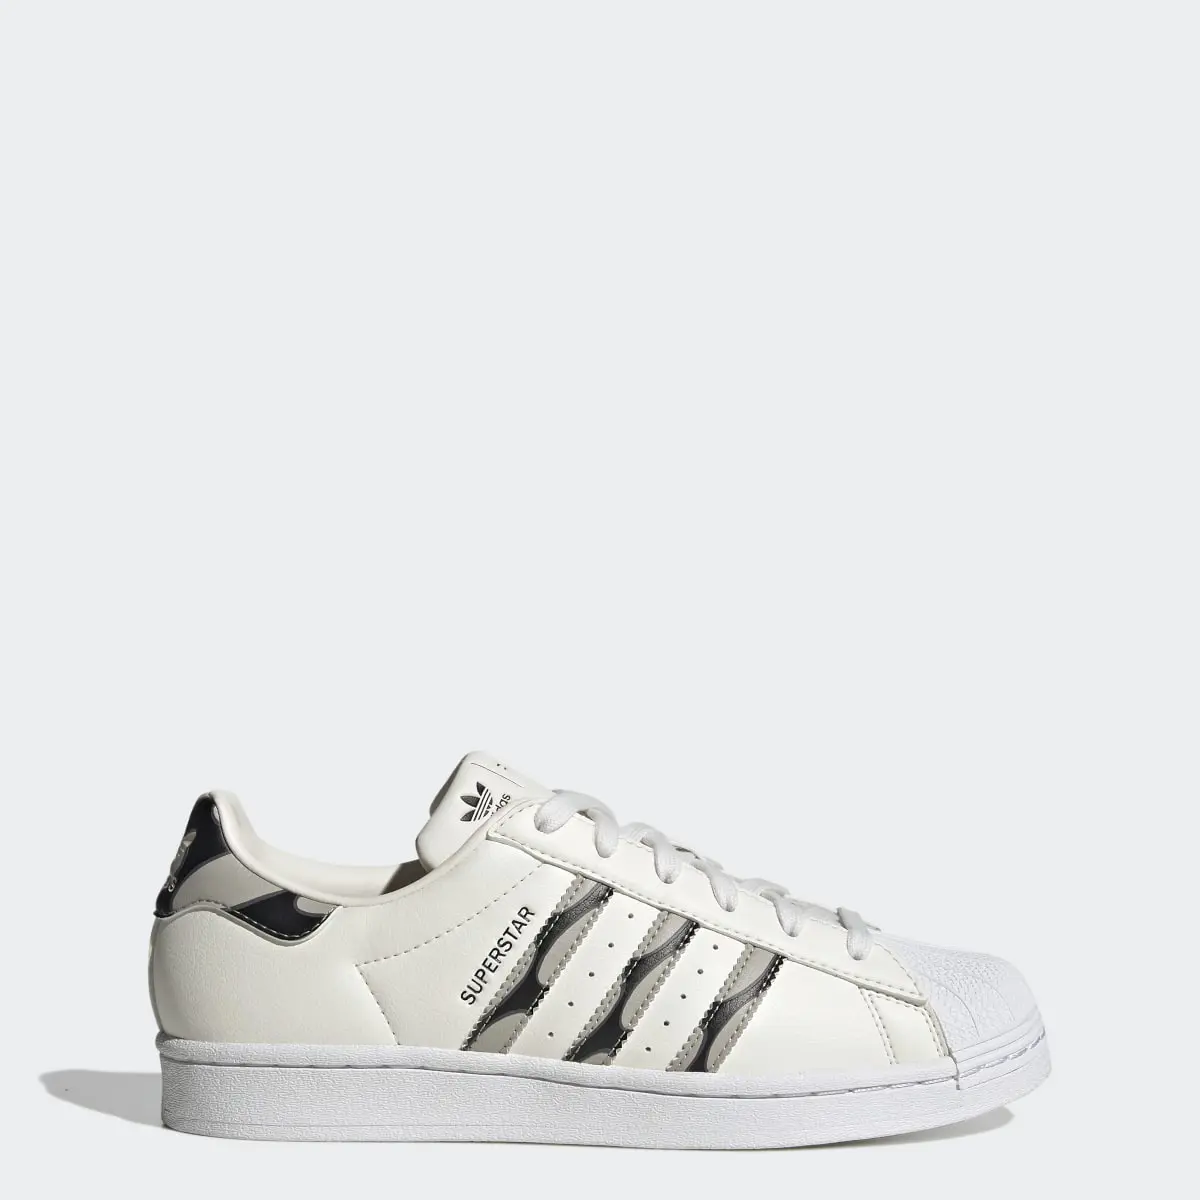 Adidas x Marimekko Superstar Schuh. 1